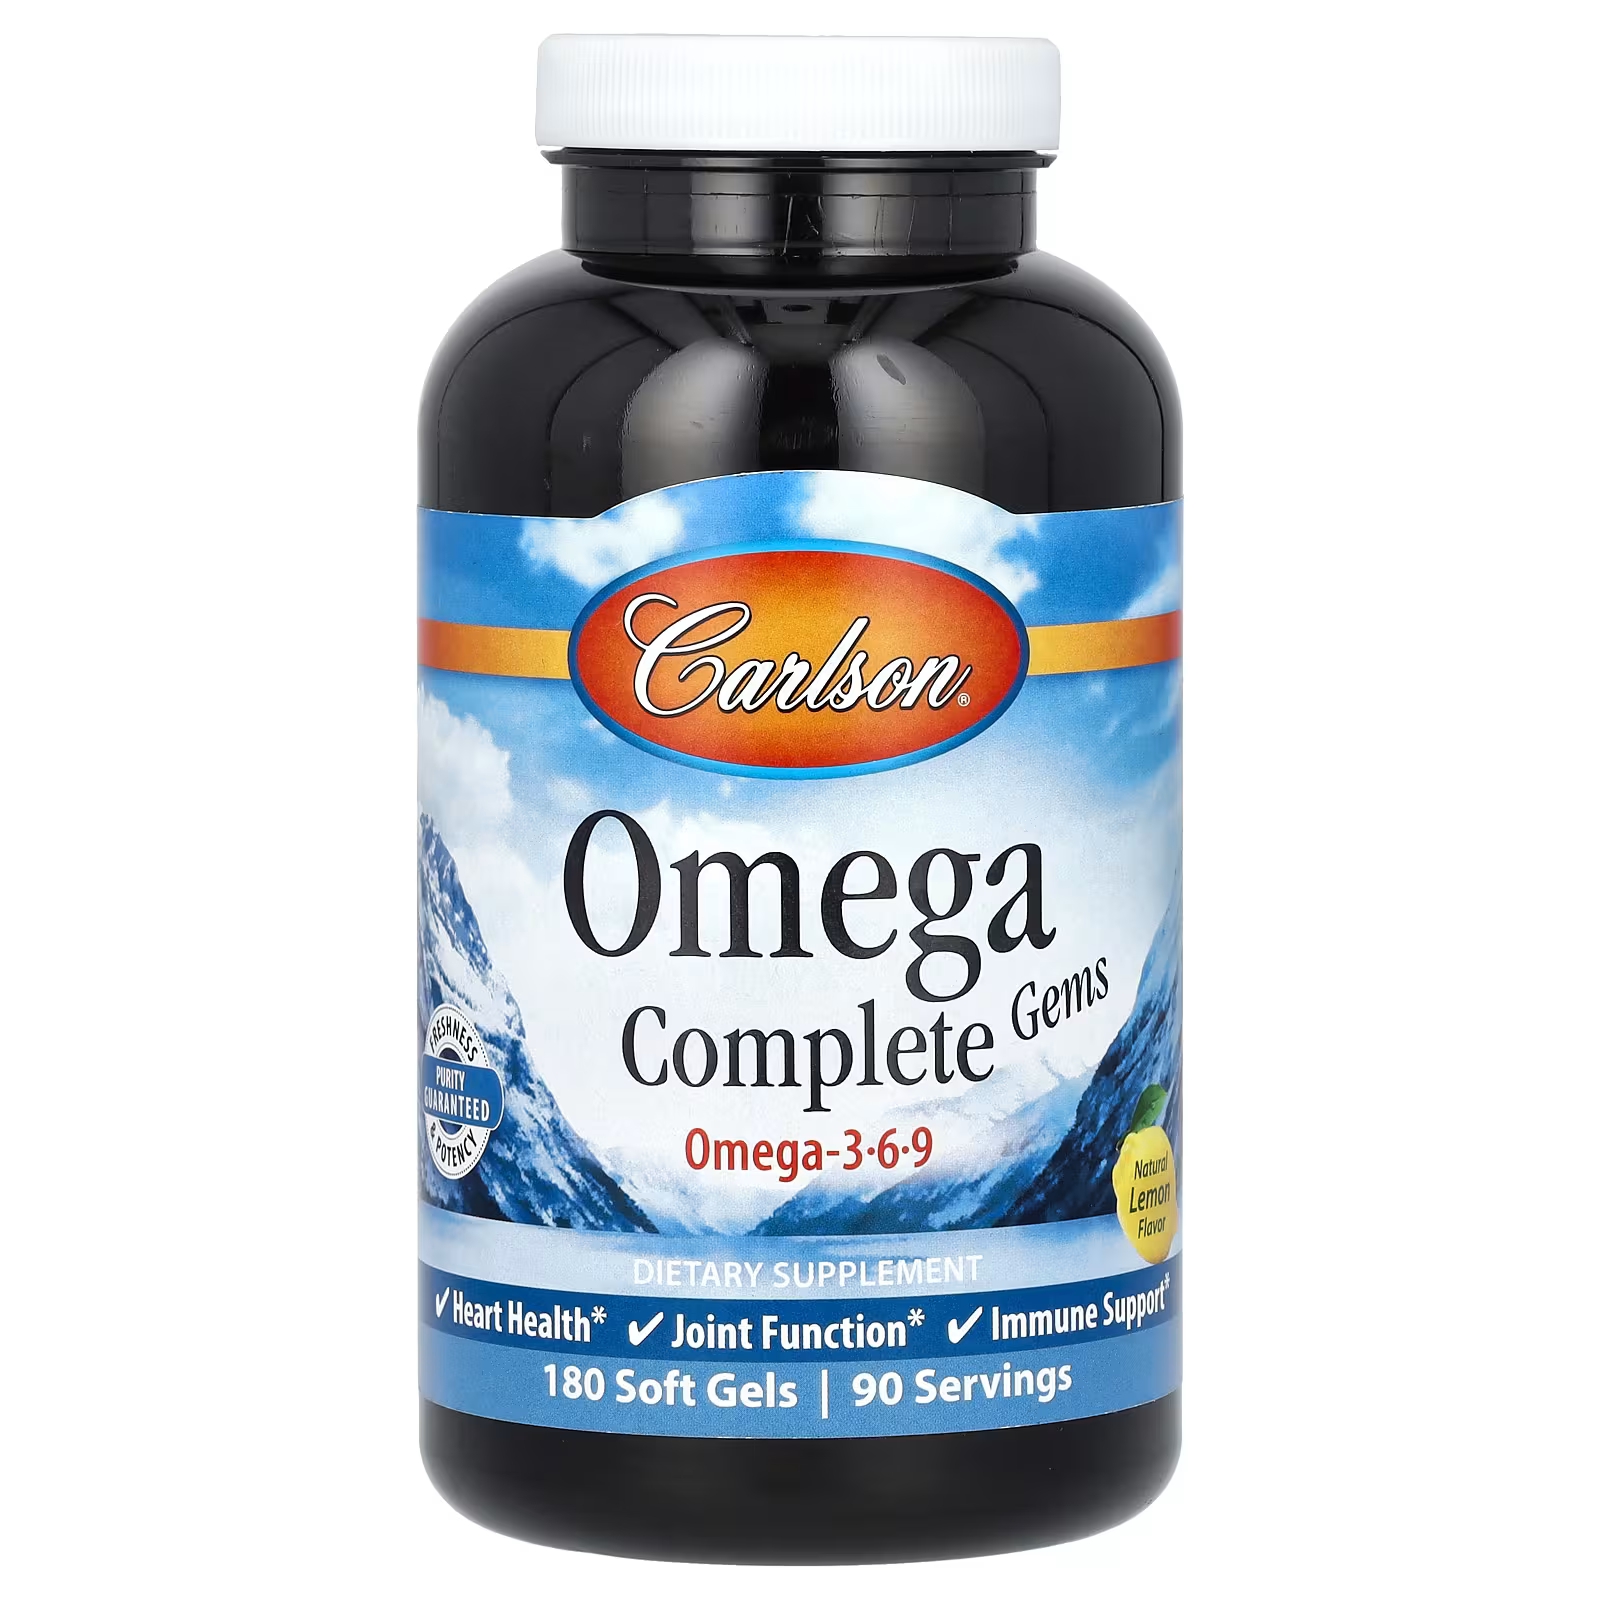 Carlson Omega Complete Gems Omega-3-6-9 Натуральный лимон 180 мягких таблеток swanson multi omega 3 6 9 220 мягких таблеток